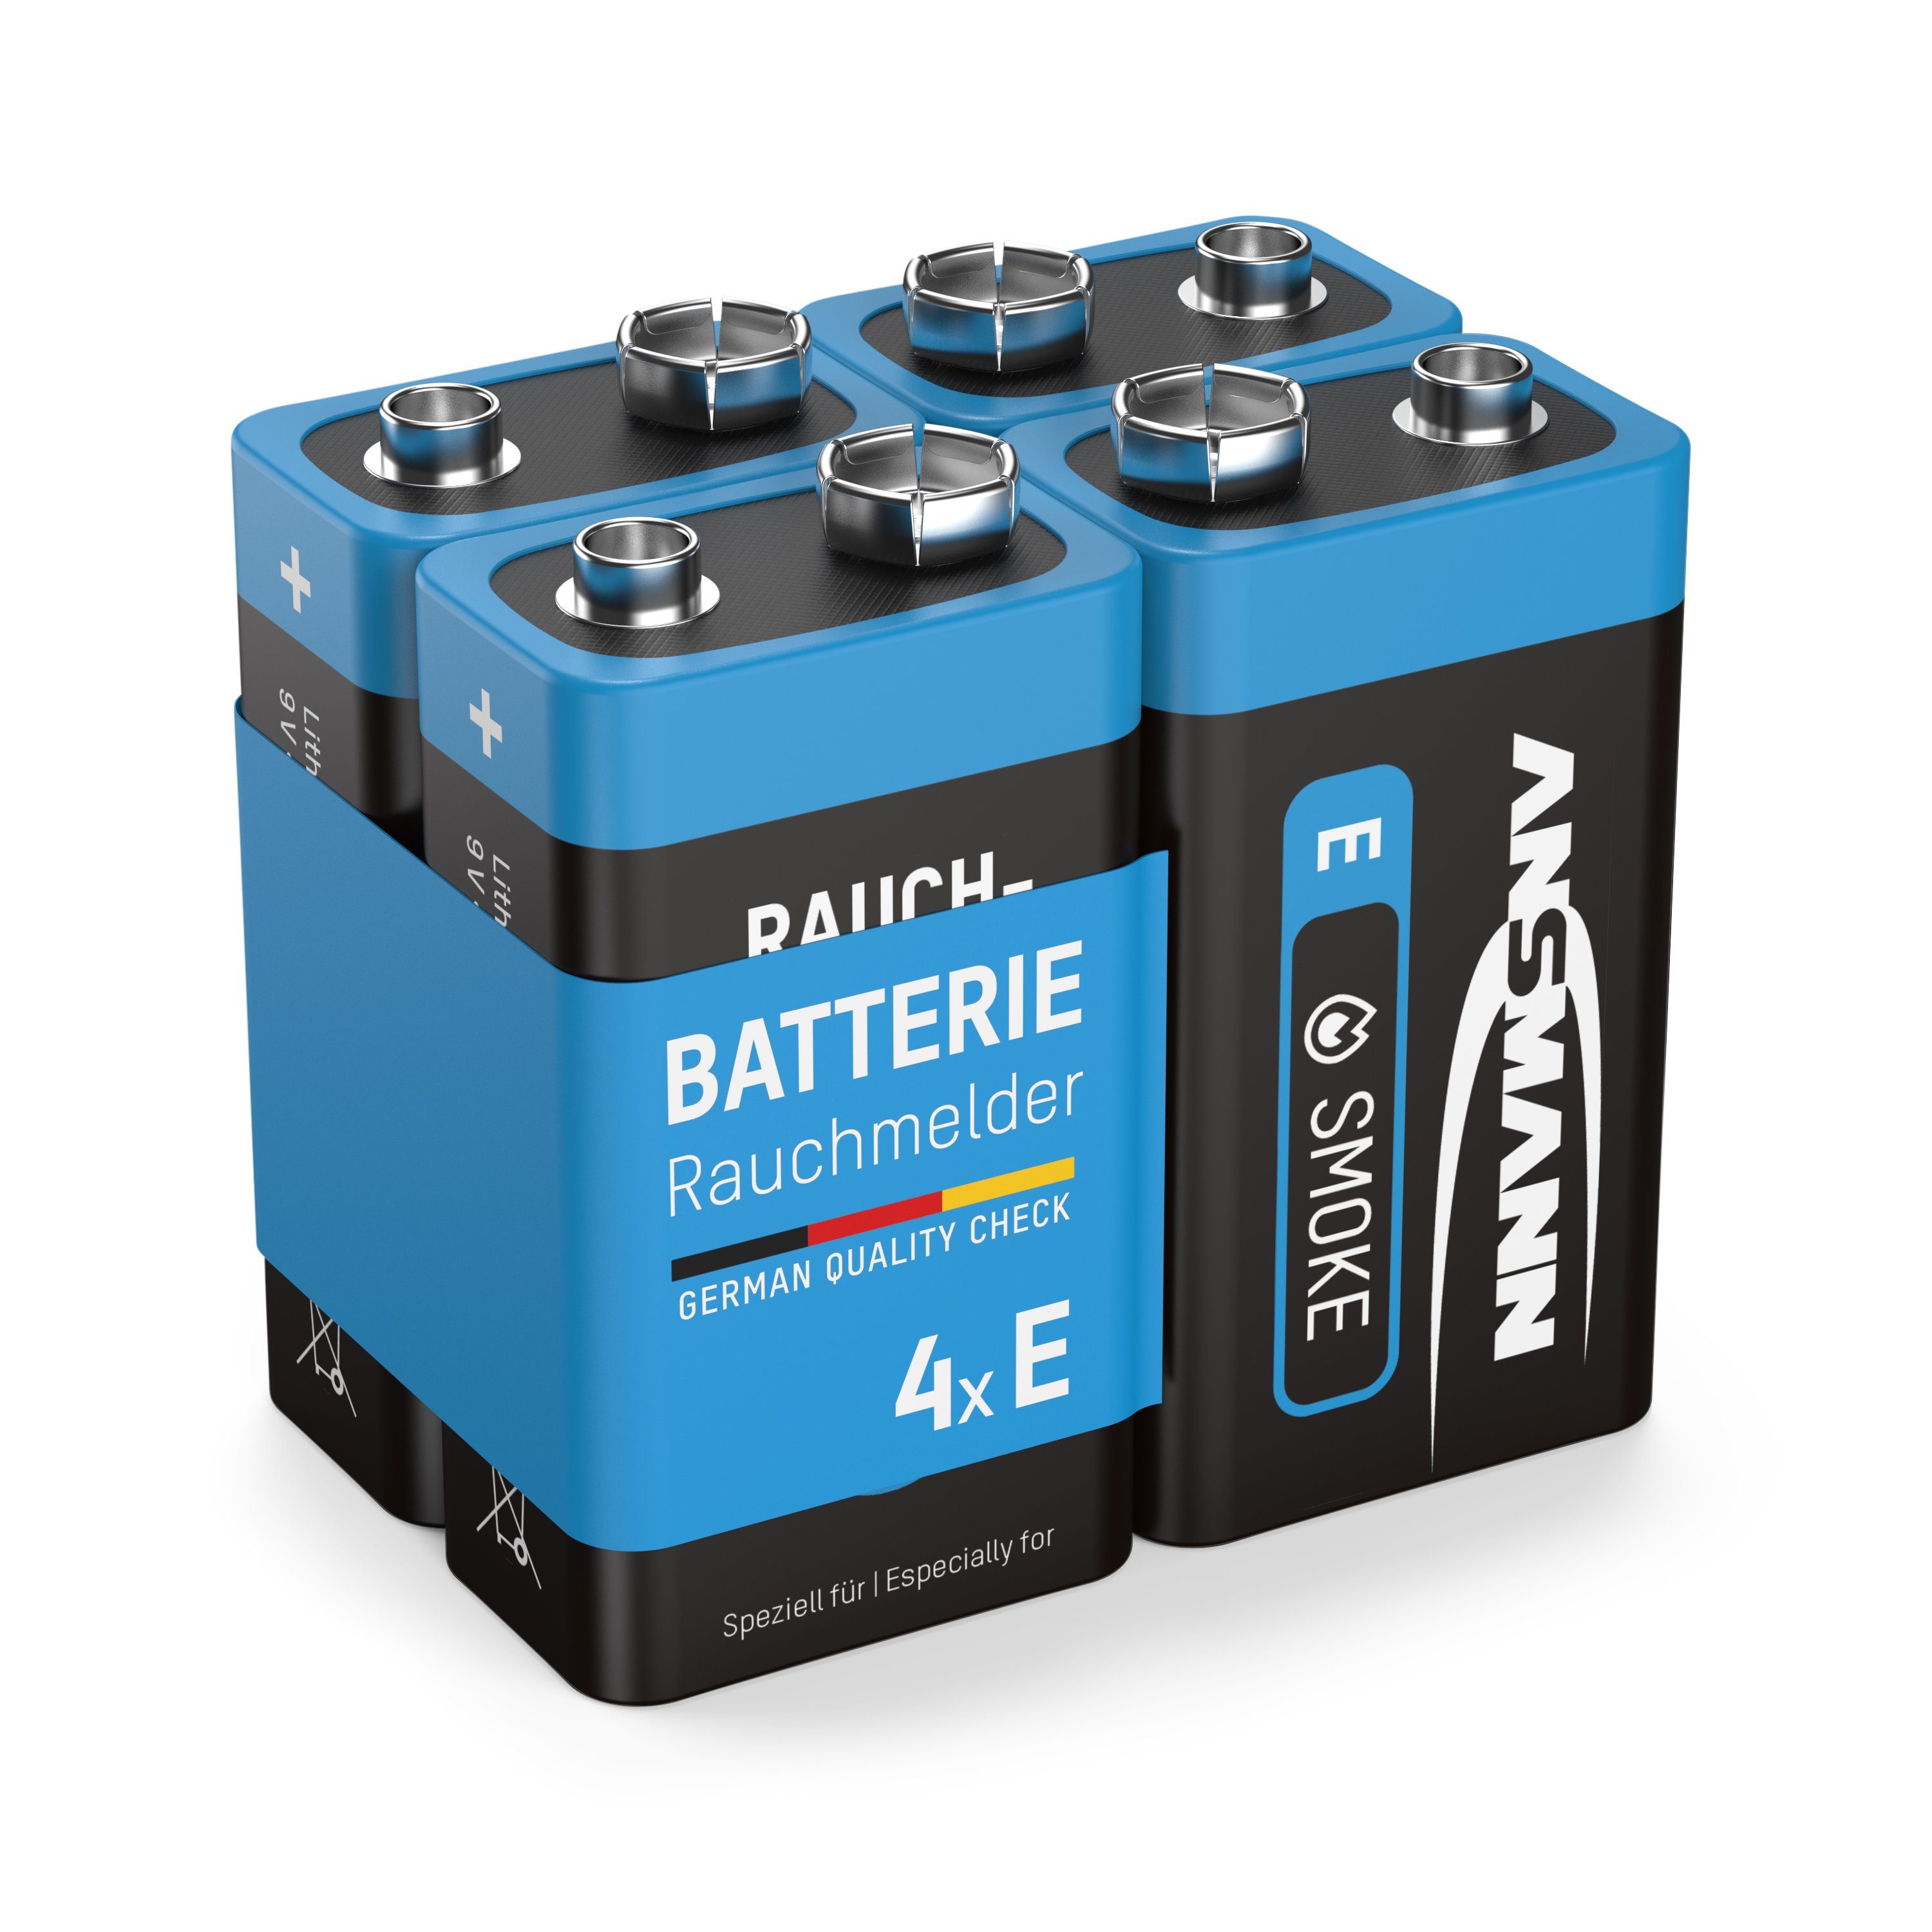 ANSMANN® 4x Lithium longlife Rauchmelder 9V Block Batterien - Premium Qualität Batterie